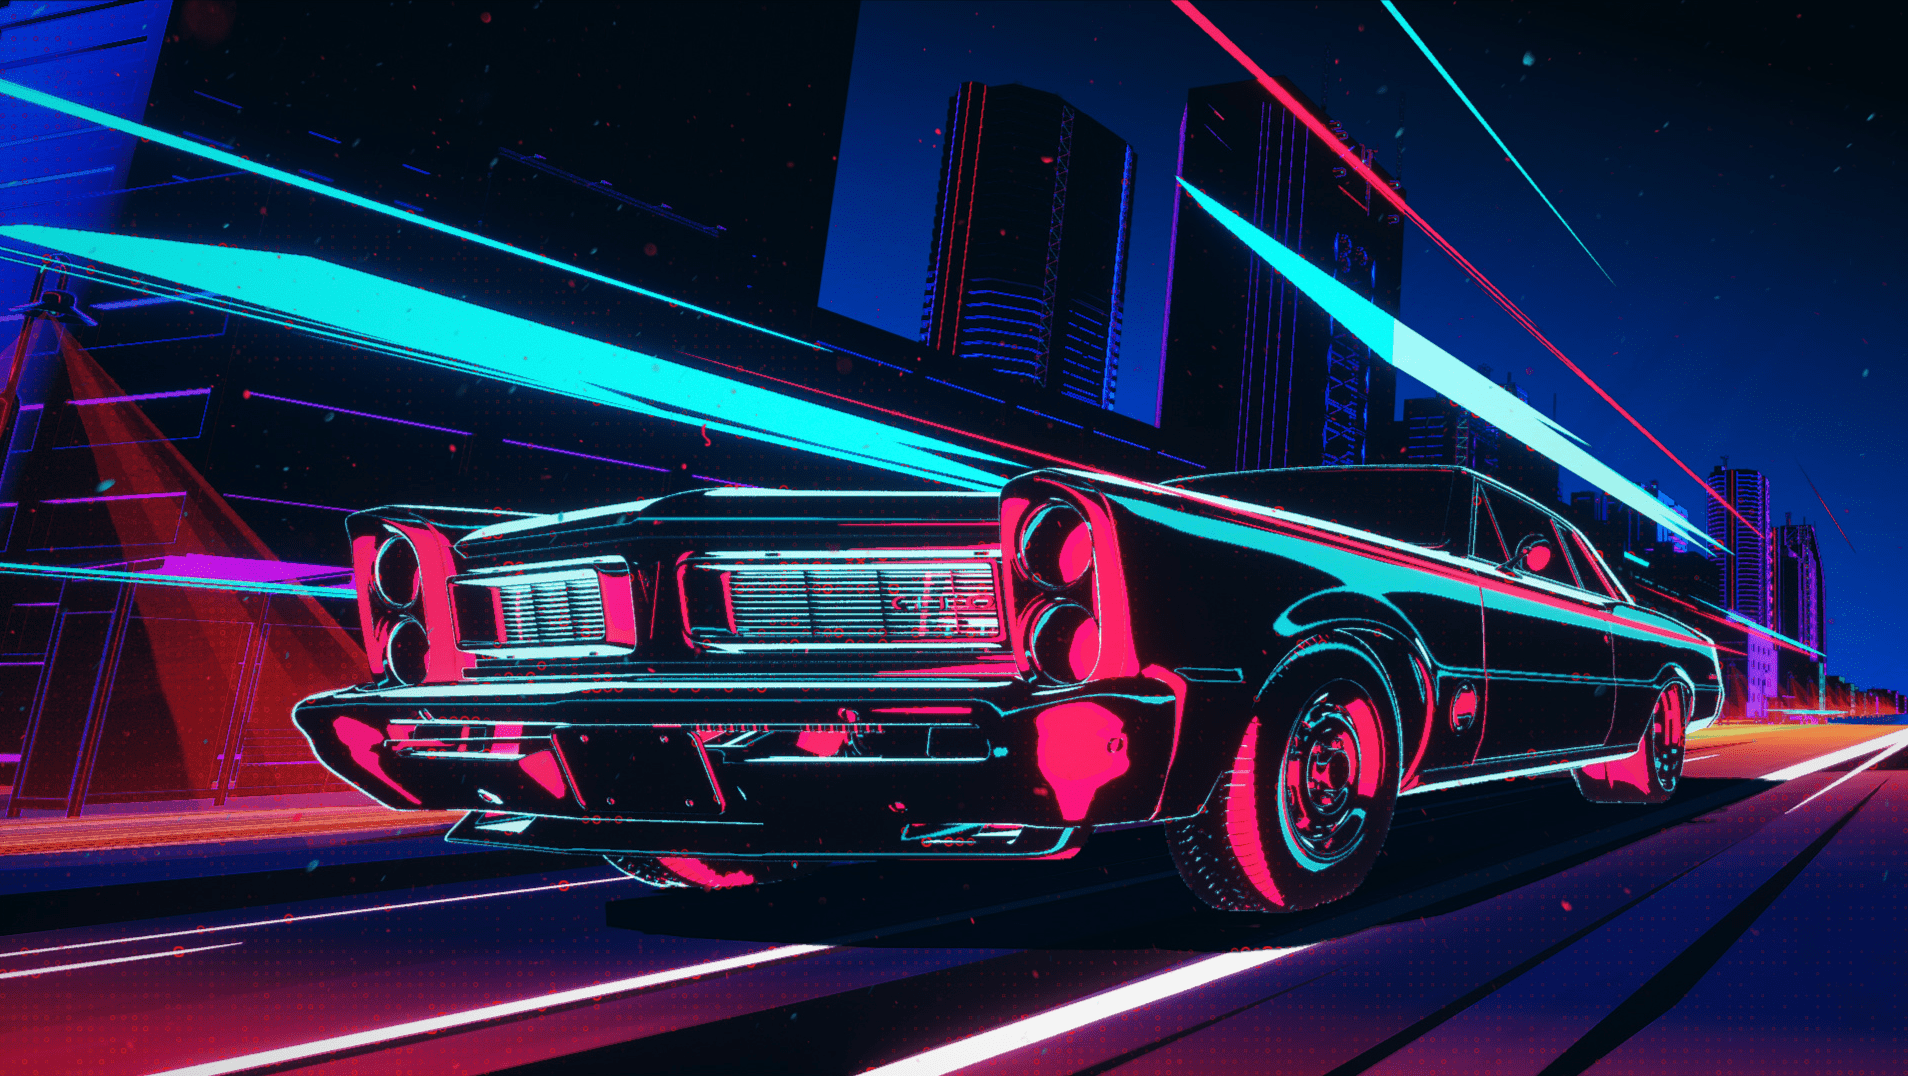 Pontiac Pontiac GTO Car Neon Cyberpunk Building Night Perspective Street Digital Art Artwork Colorfu 1908x1076